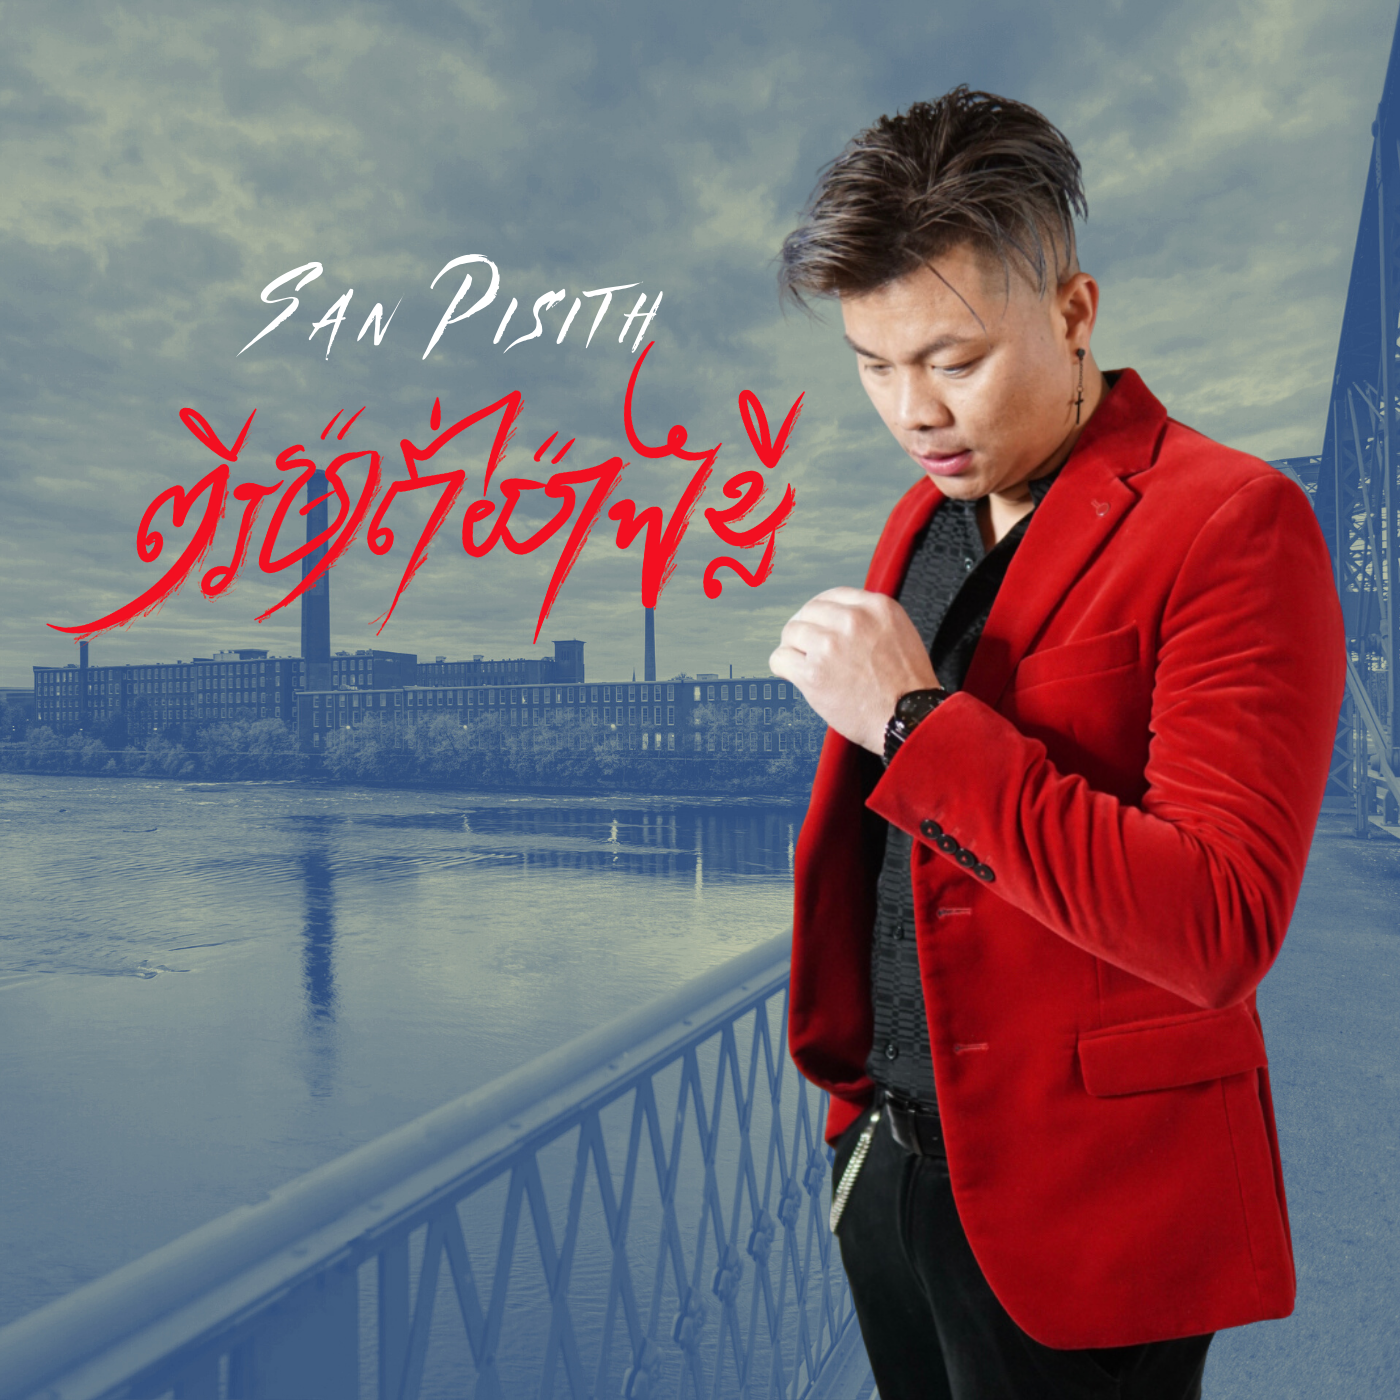 San Pisith - ពីរម៉ាត់យ៉ាងខ្លី Pi Mat Yang Kley (album)